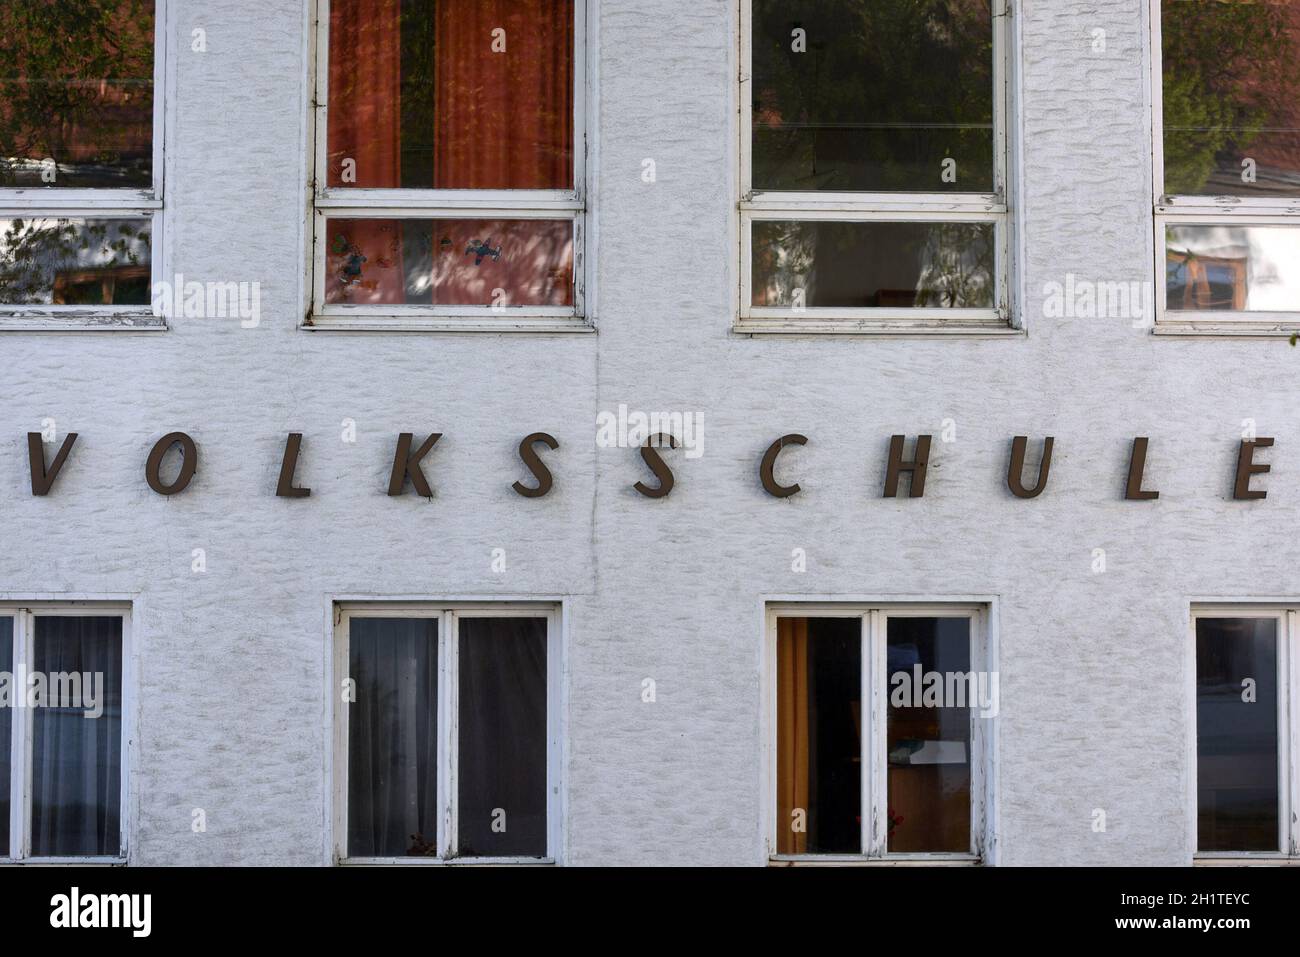 Eine alte, geschlossene Volksschule in Österreich, Europa - An old, closed elementary school in Austria, Europe Stock Photo